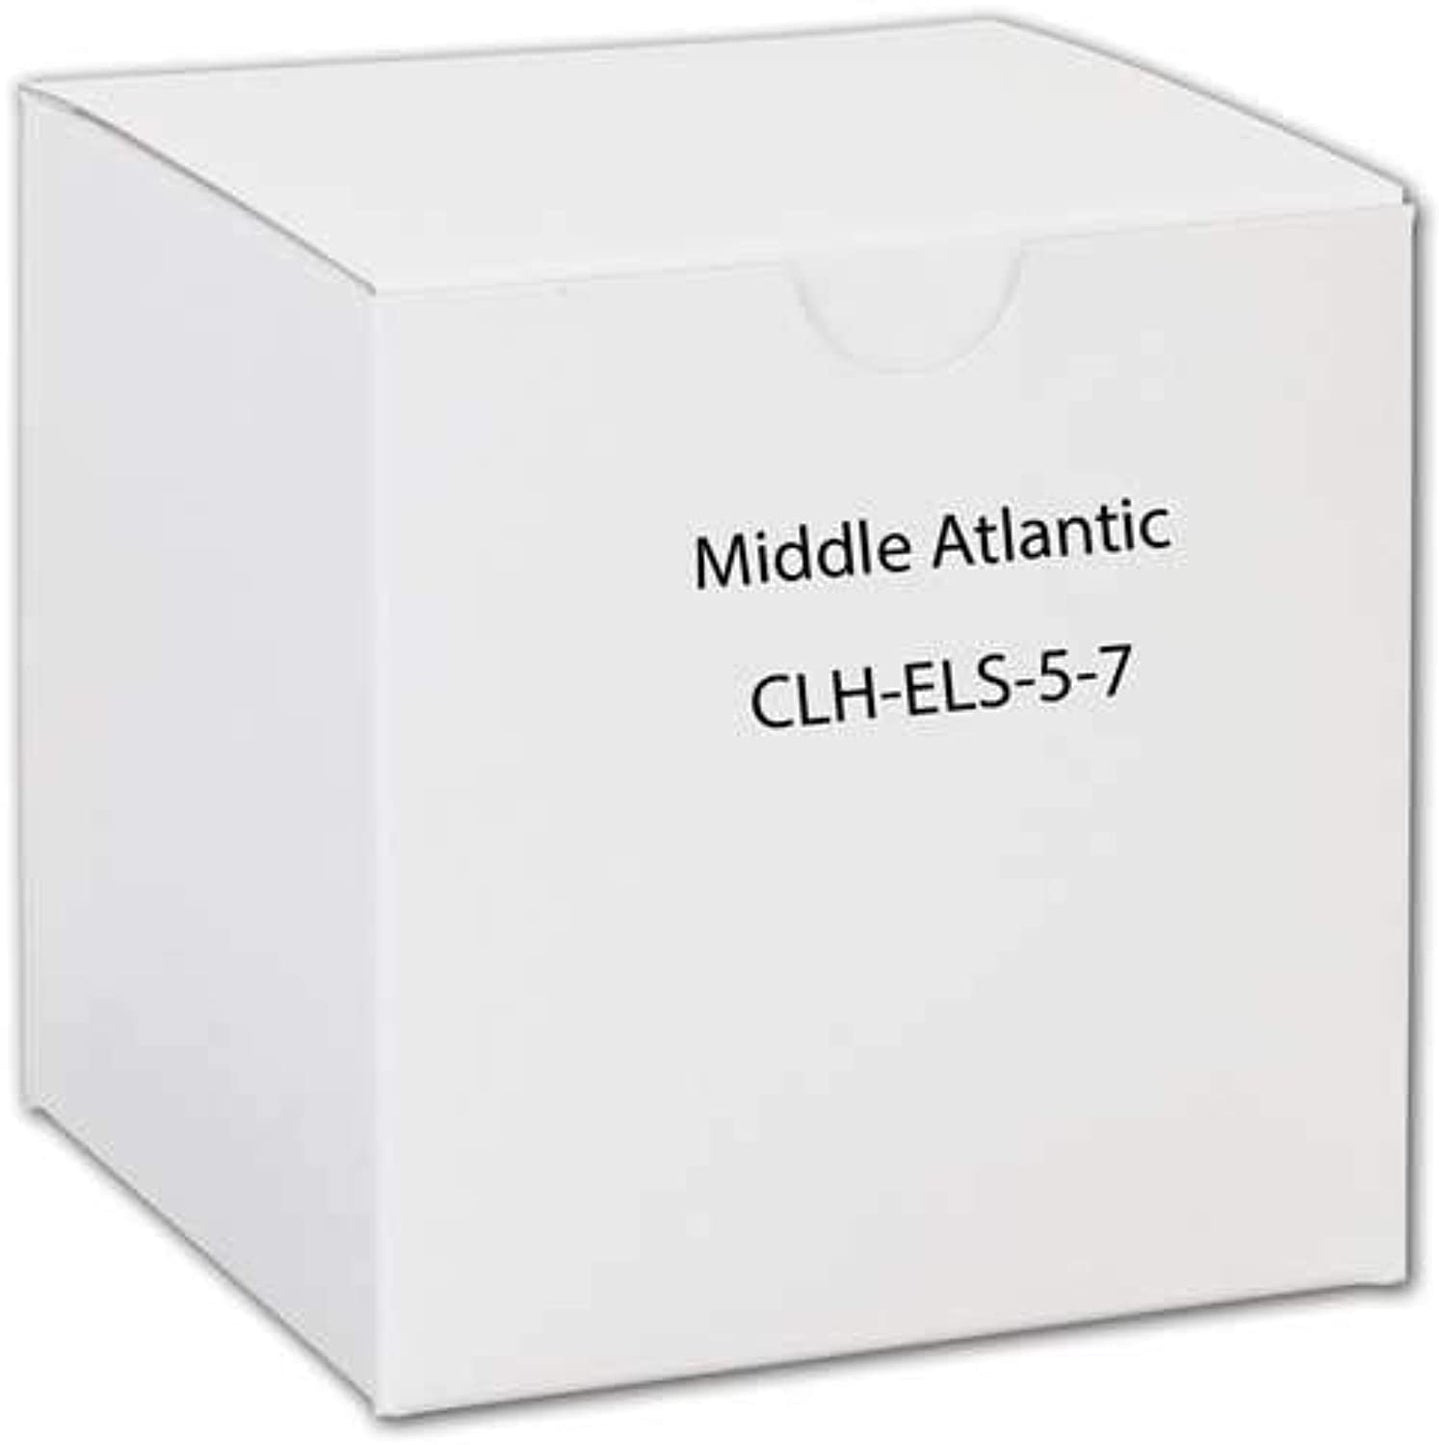 Middle Atlantic CLH-ELS-5-7